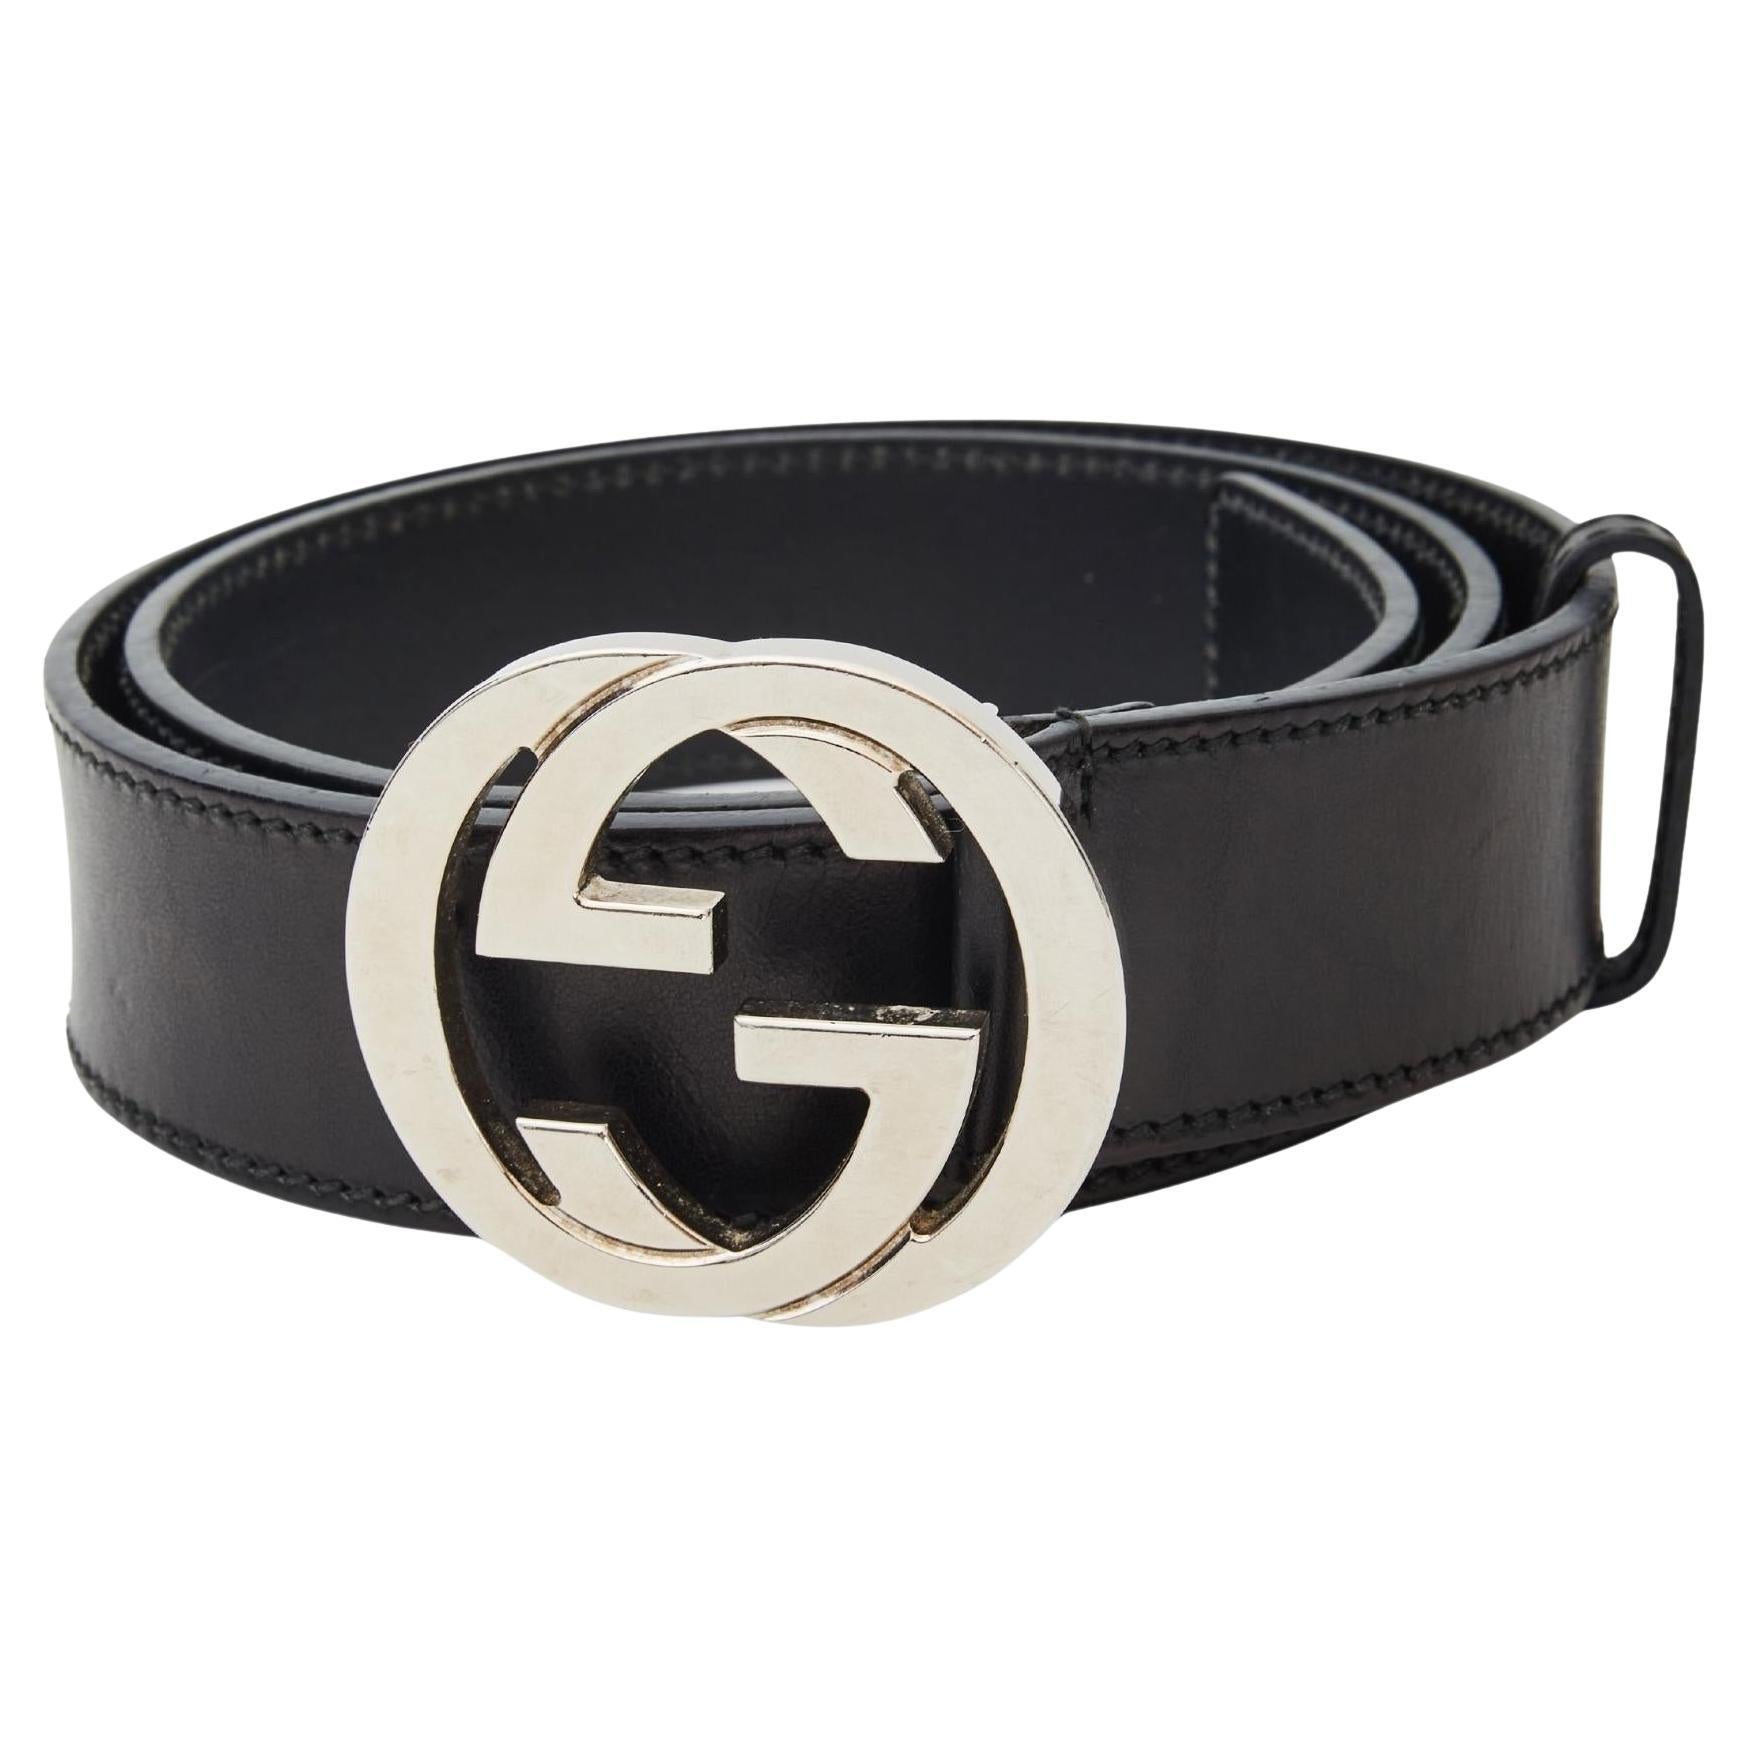 Gucci Interlocking GG Silver Black Leather Belt (Size 90/36)